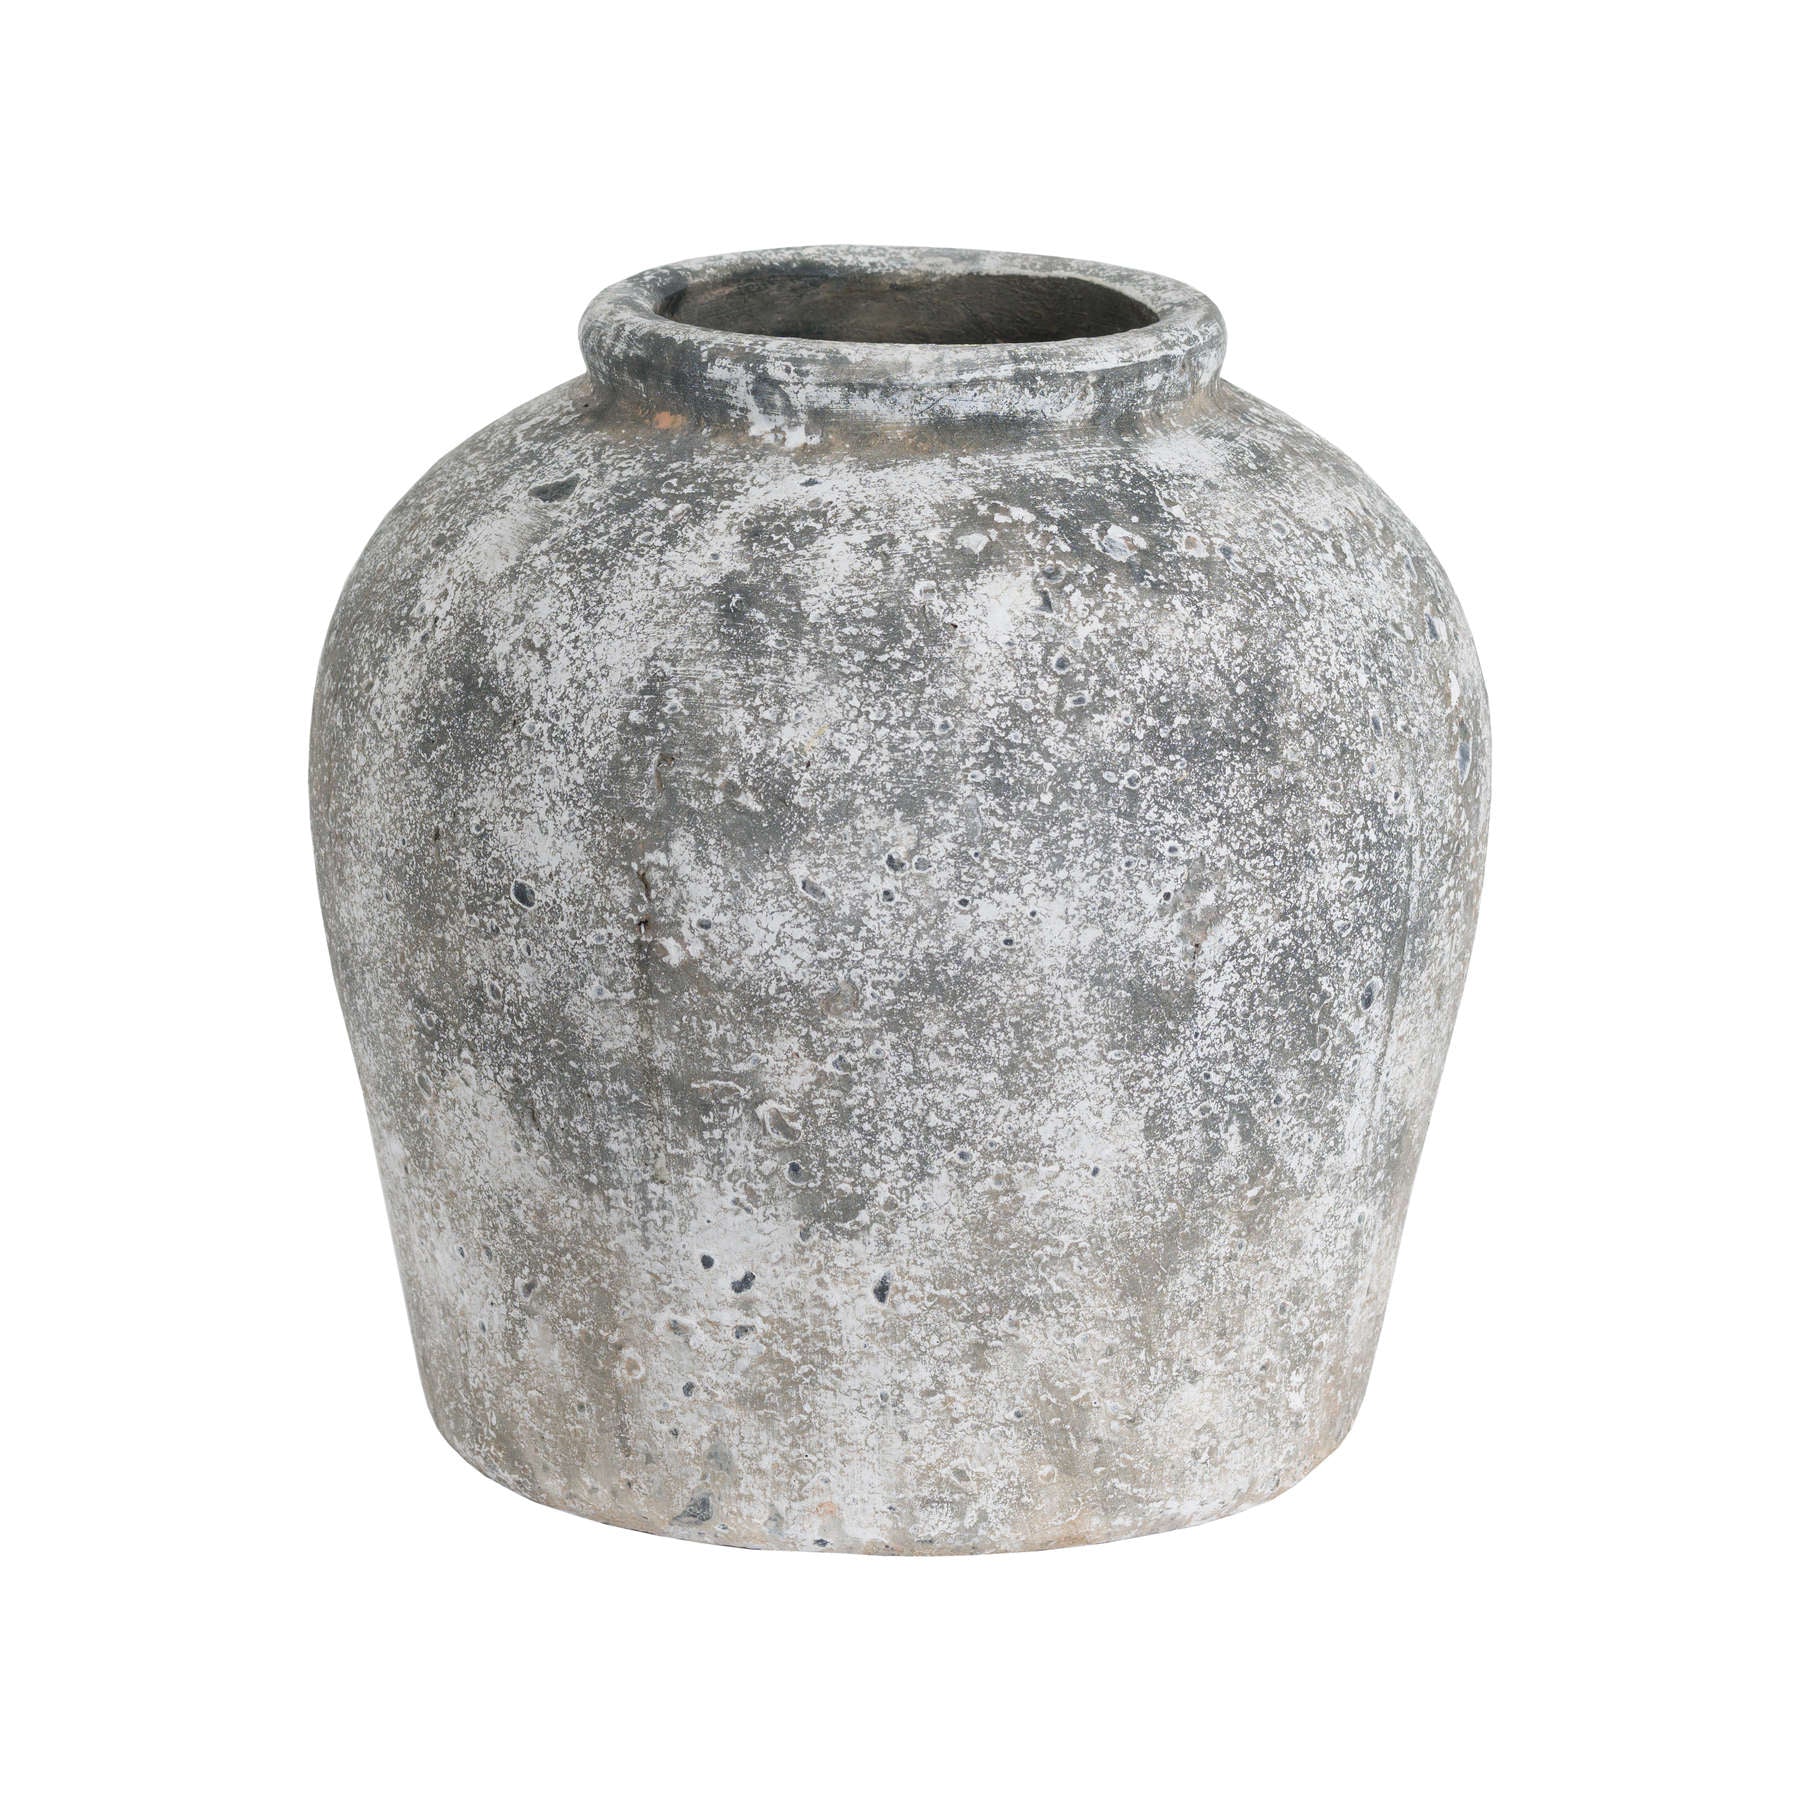 View Aged Stone Ceramic Vase information